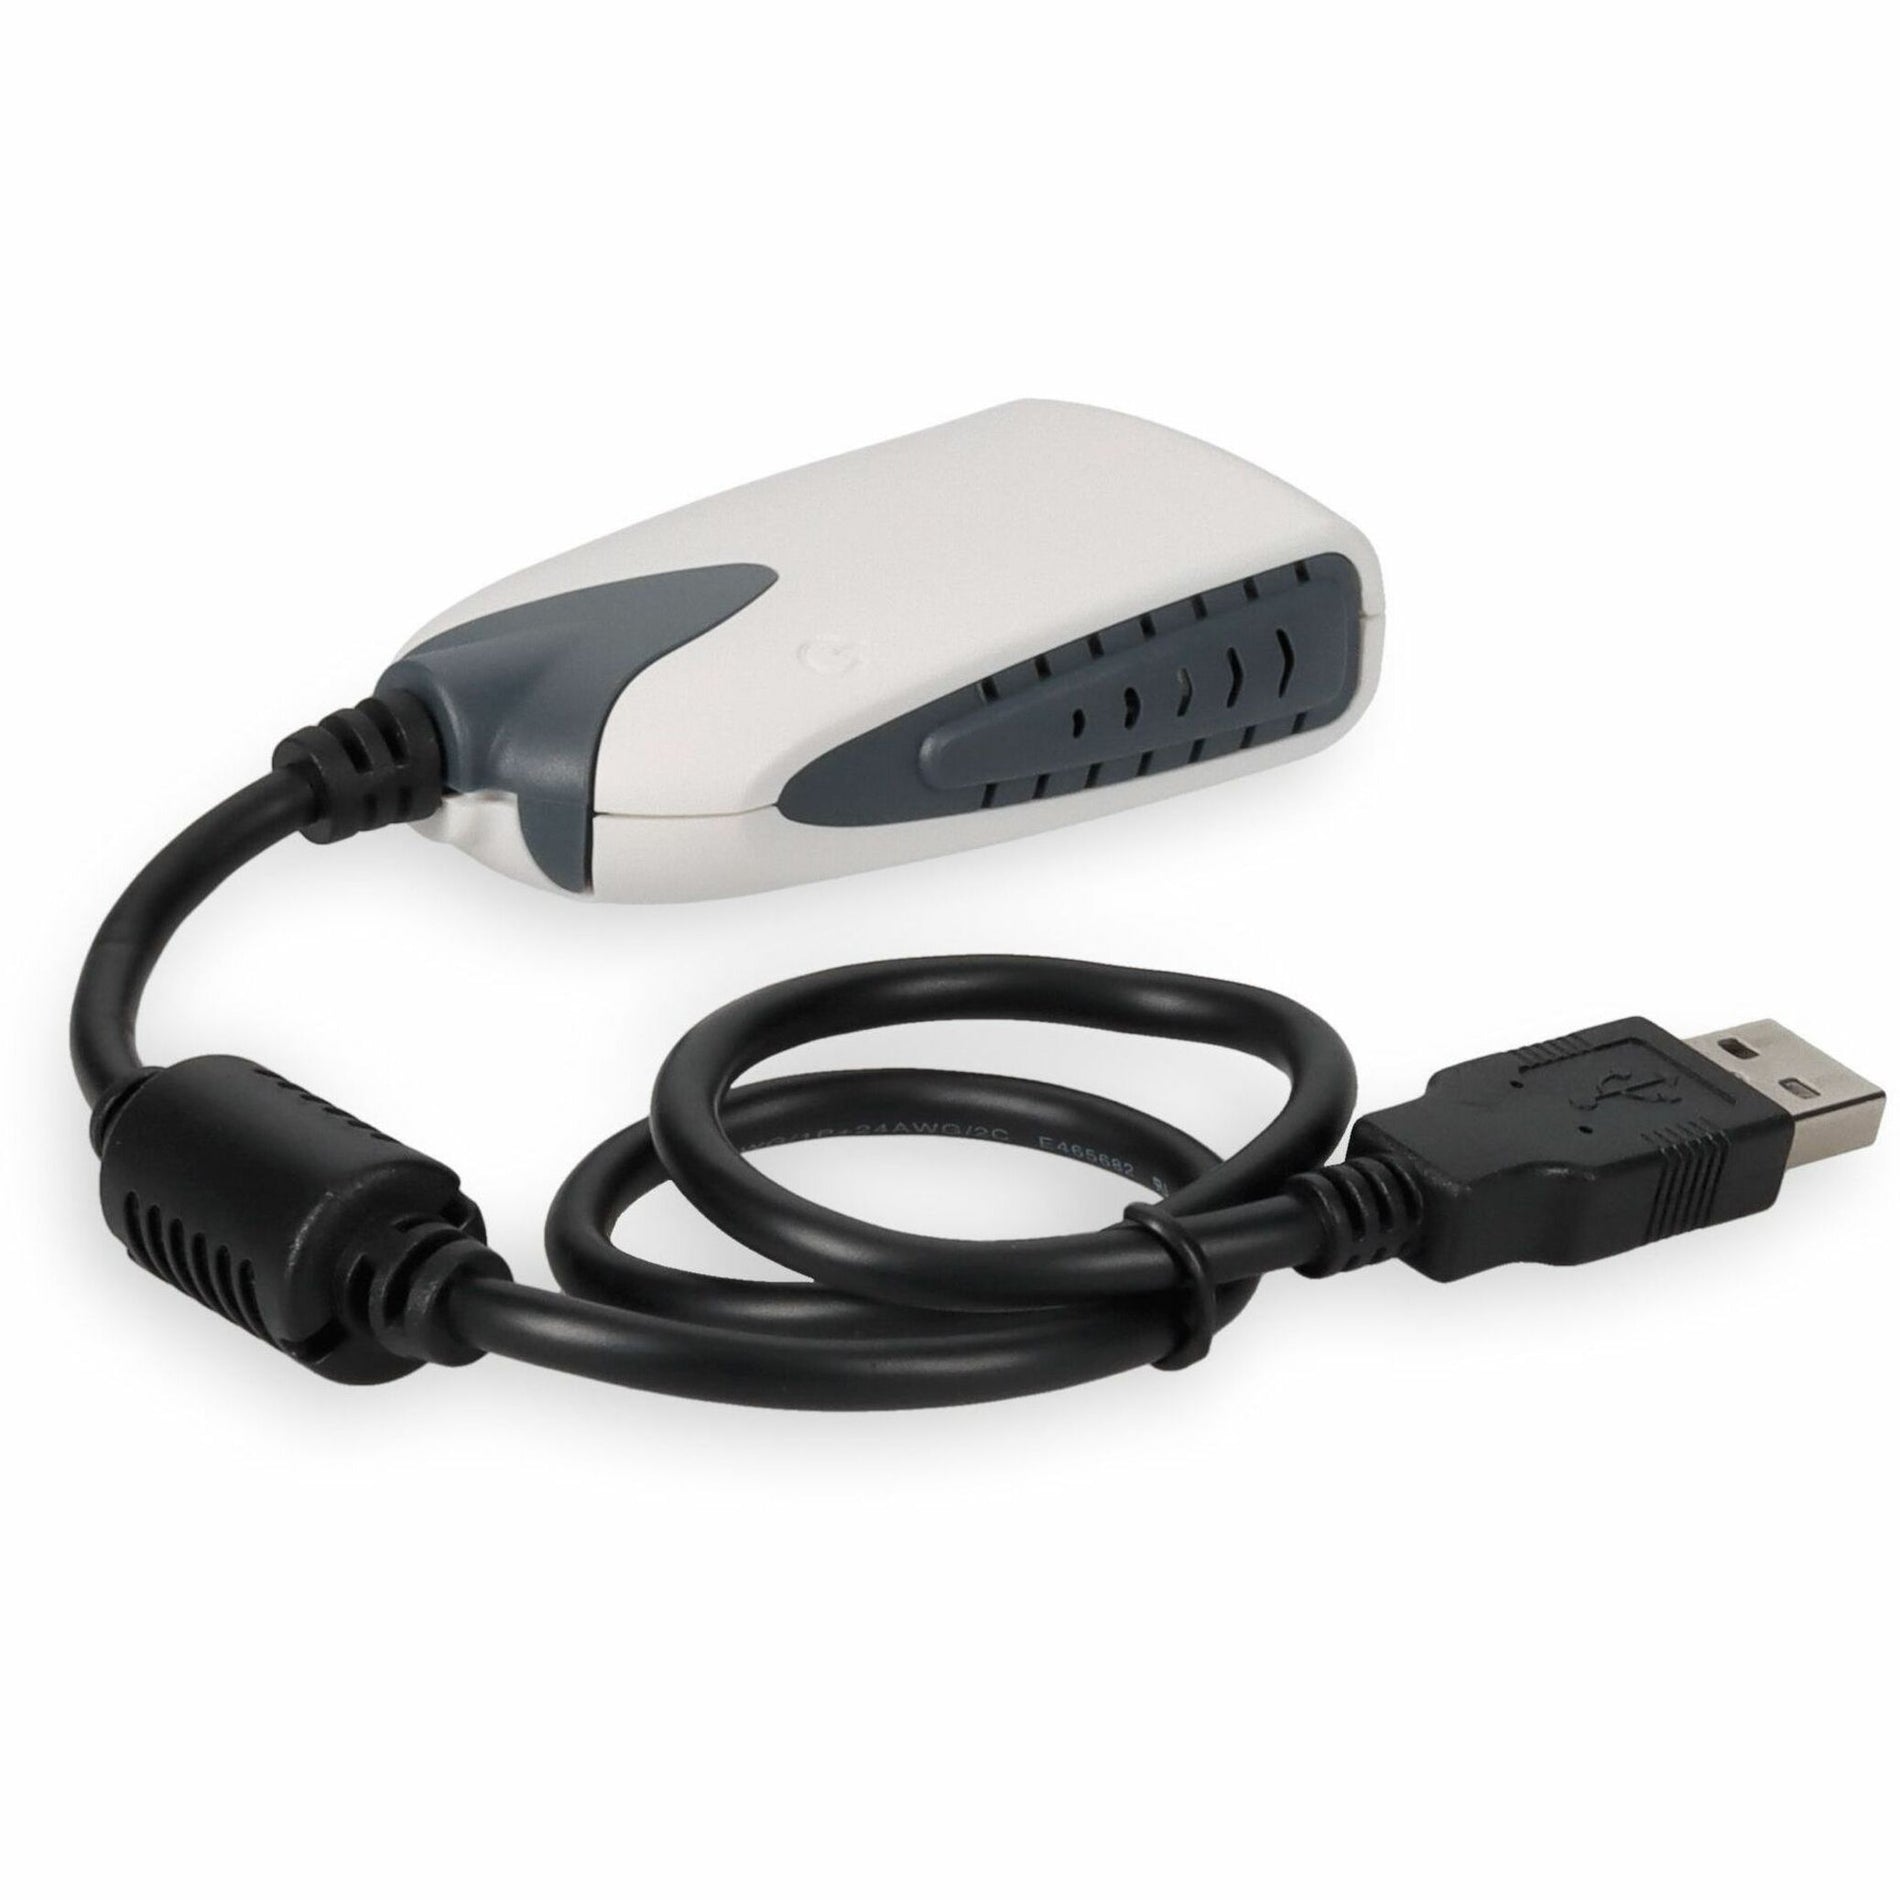 AddOn USB2VGA USB 2.0 to VGA Multi Monitor Adapter/External Video Card, Black